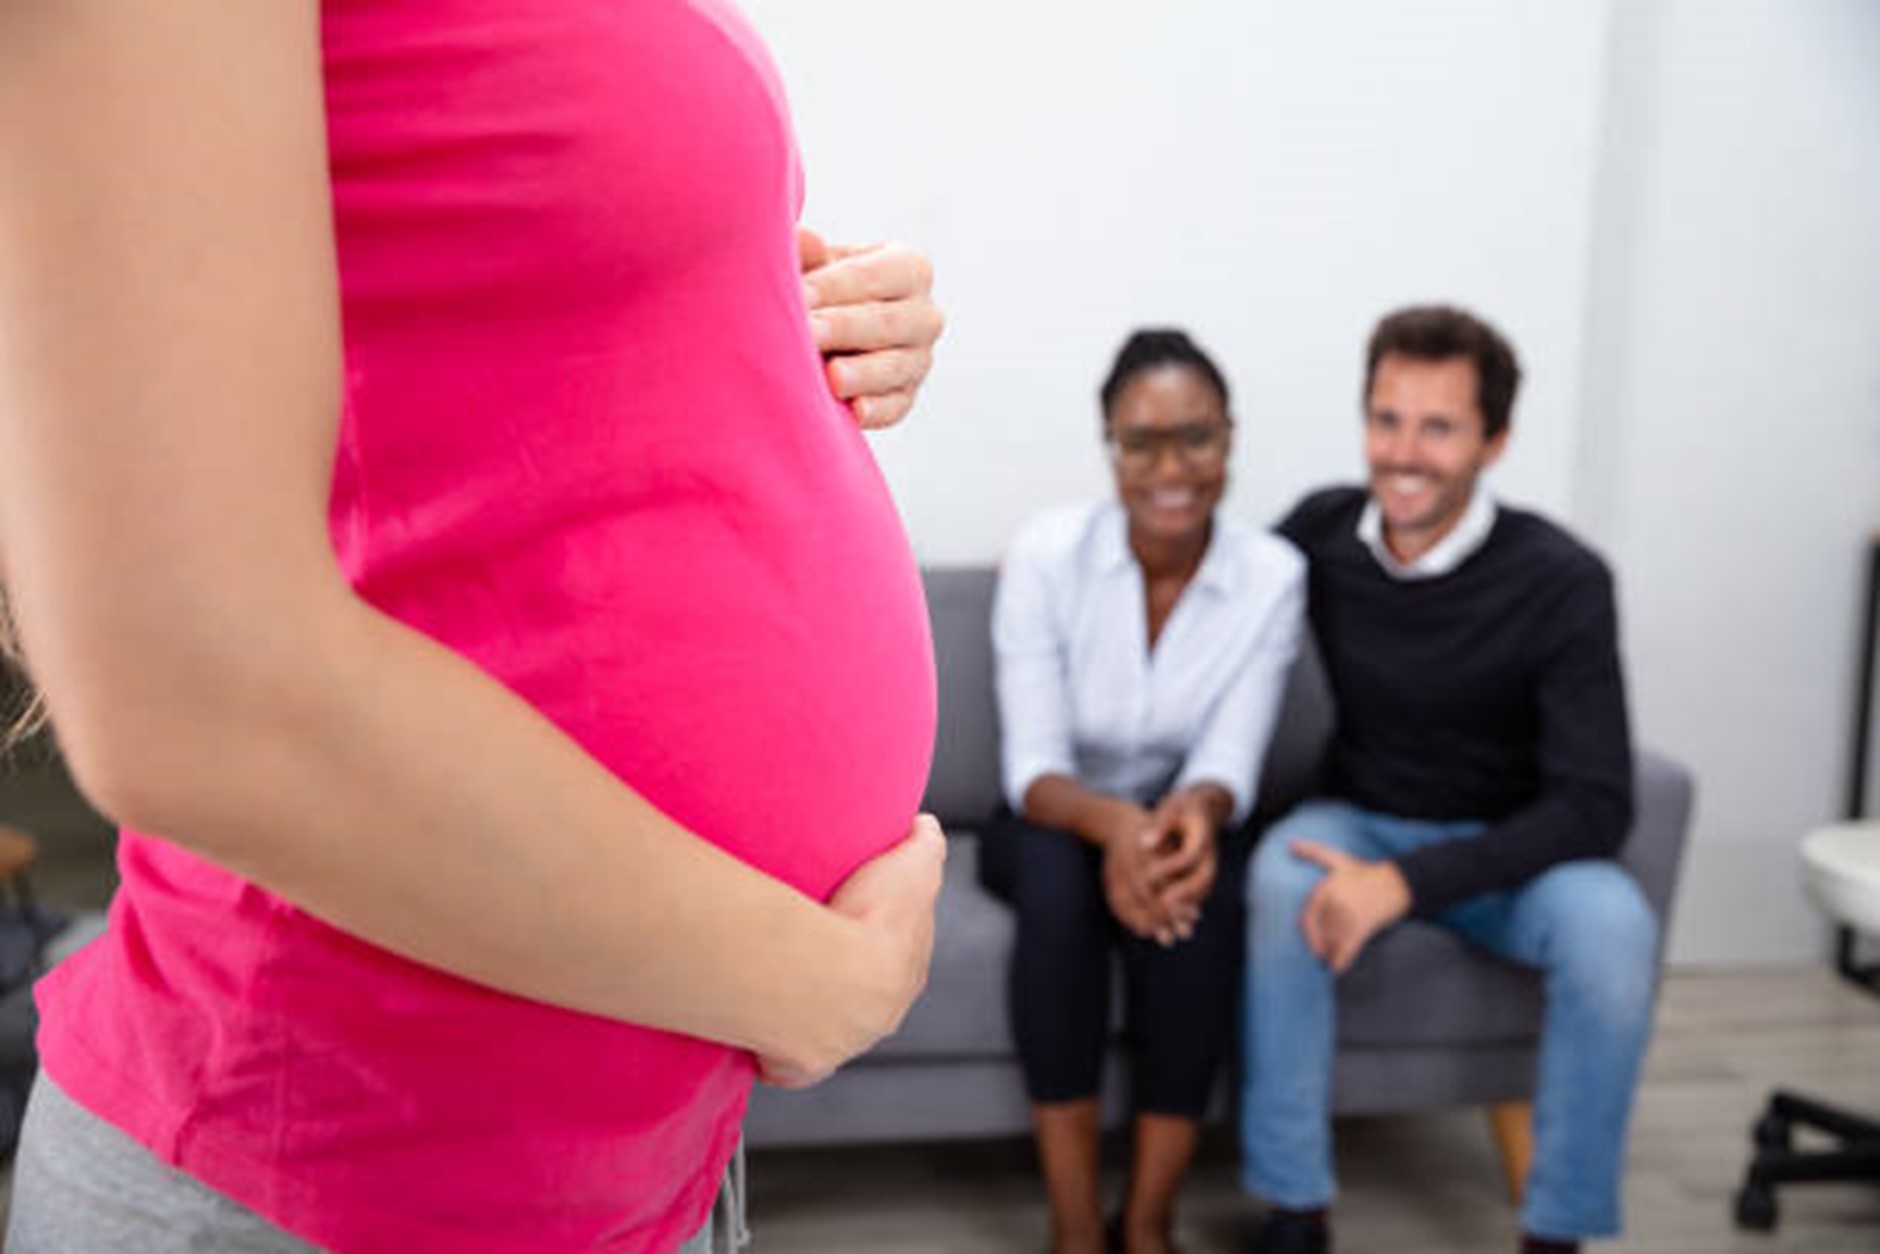 John Szepietowski discusses the legal consequences of surrogacy